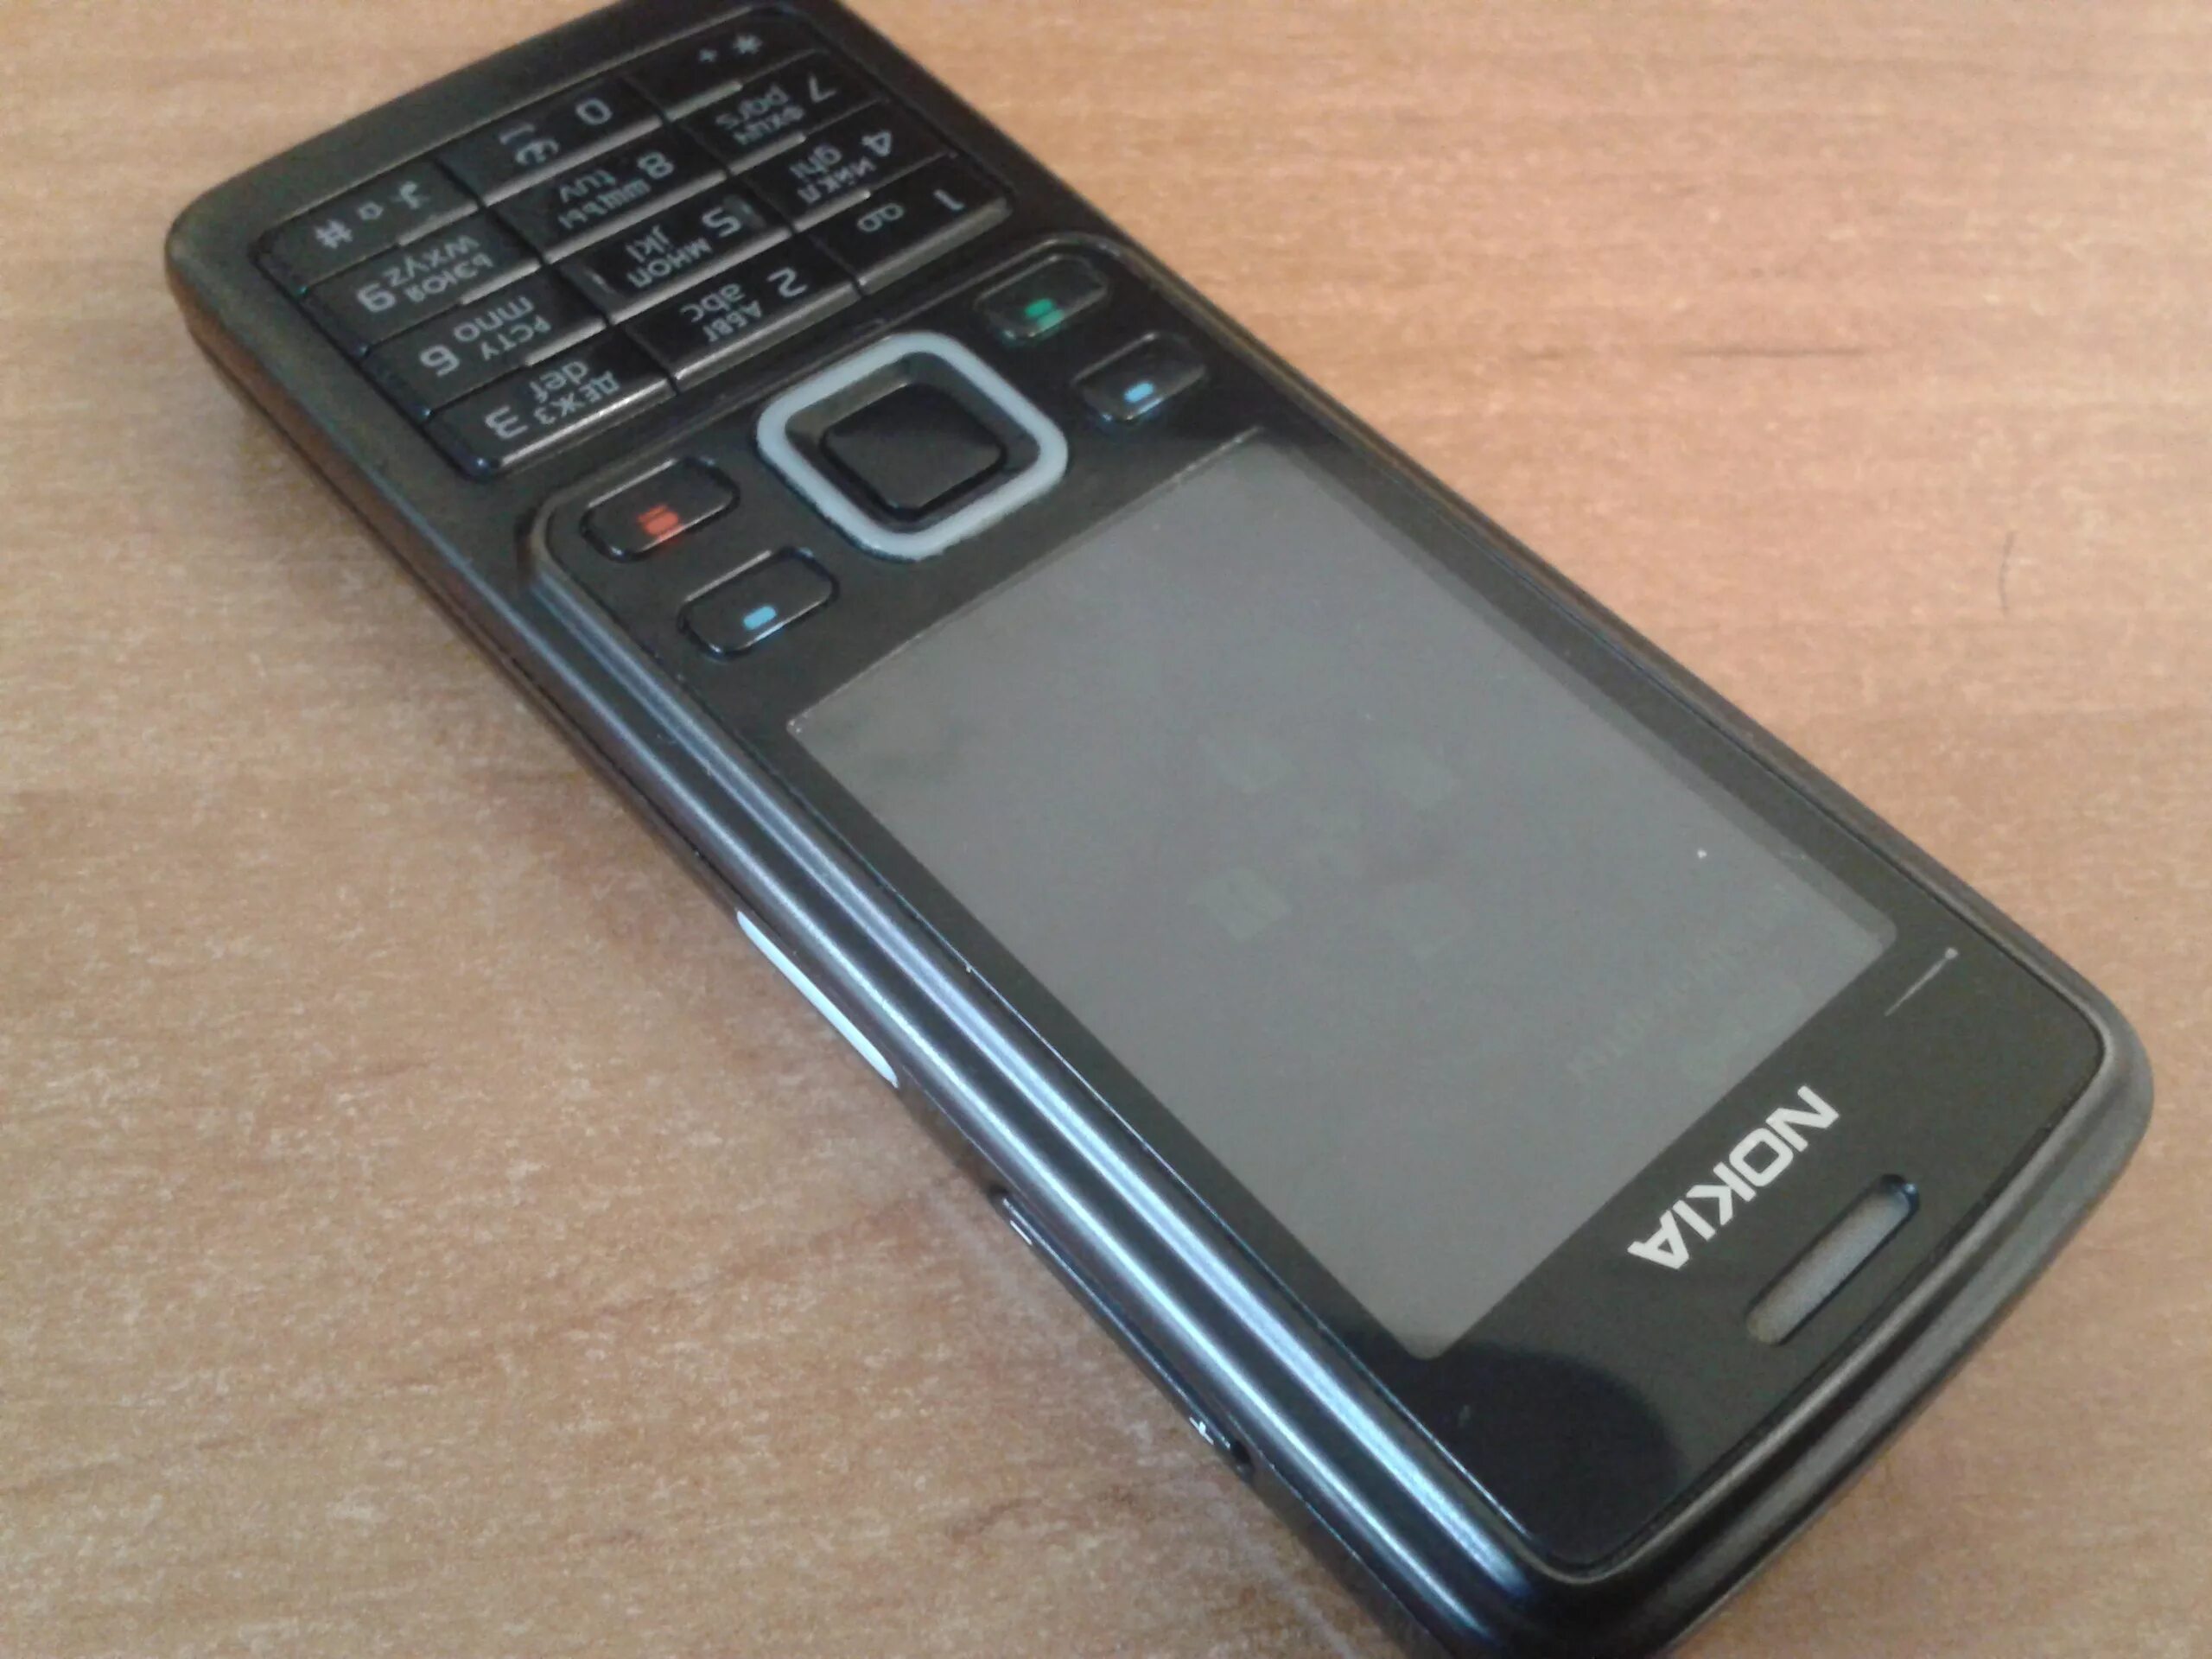 Нокиа 63 00. Nokia 6300 2007. Nokia 6300 2g. Nokia Железный корпус 6300. Nokia 63 00.